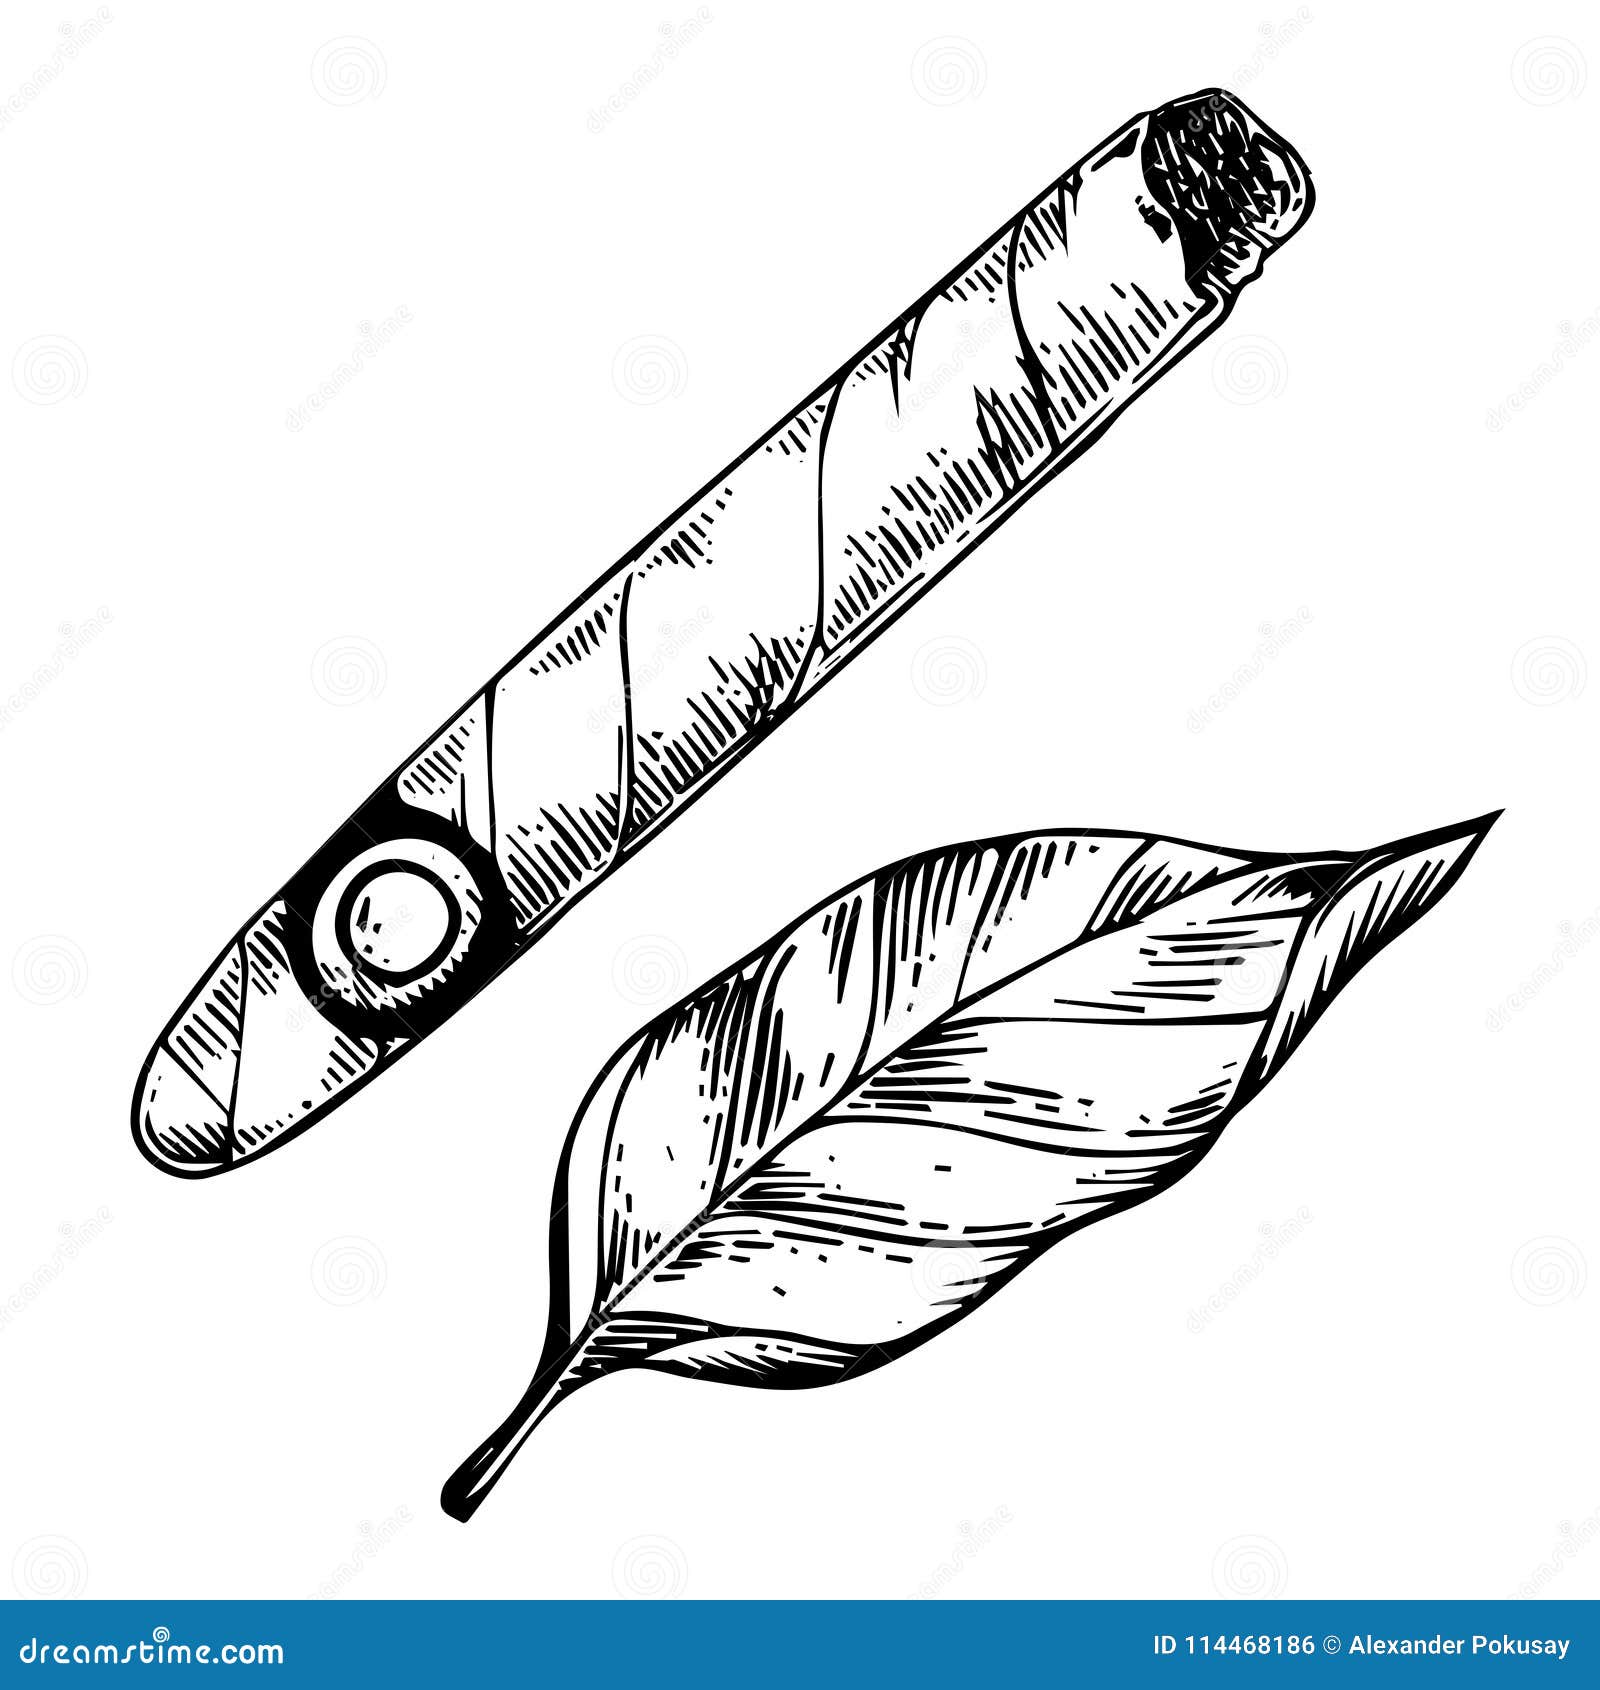 cigar and tobacco leaf engraving 